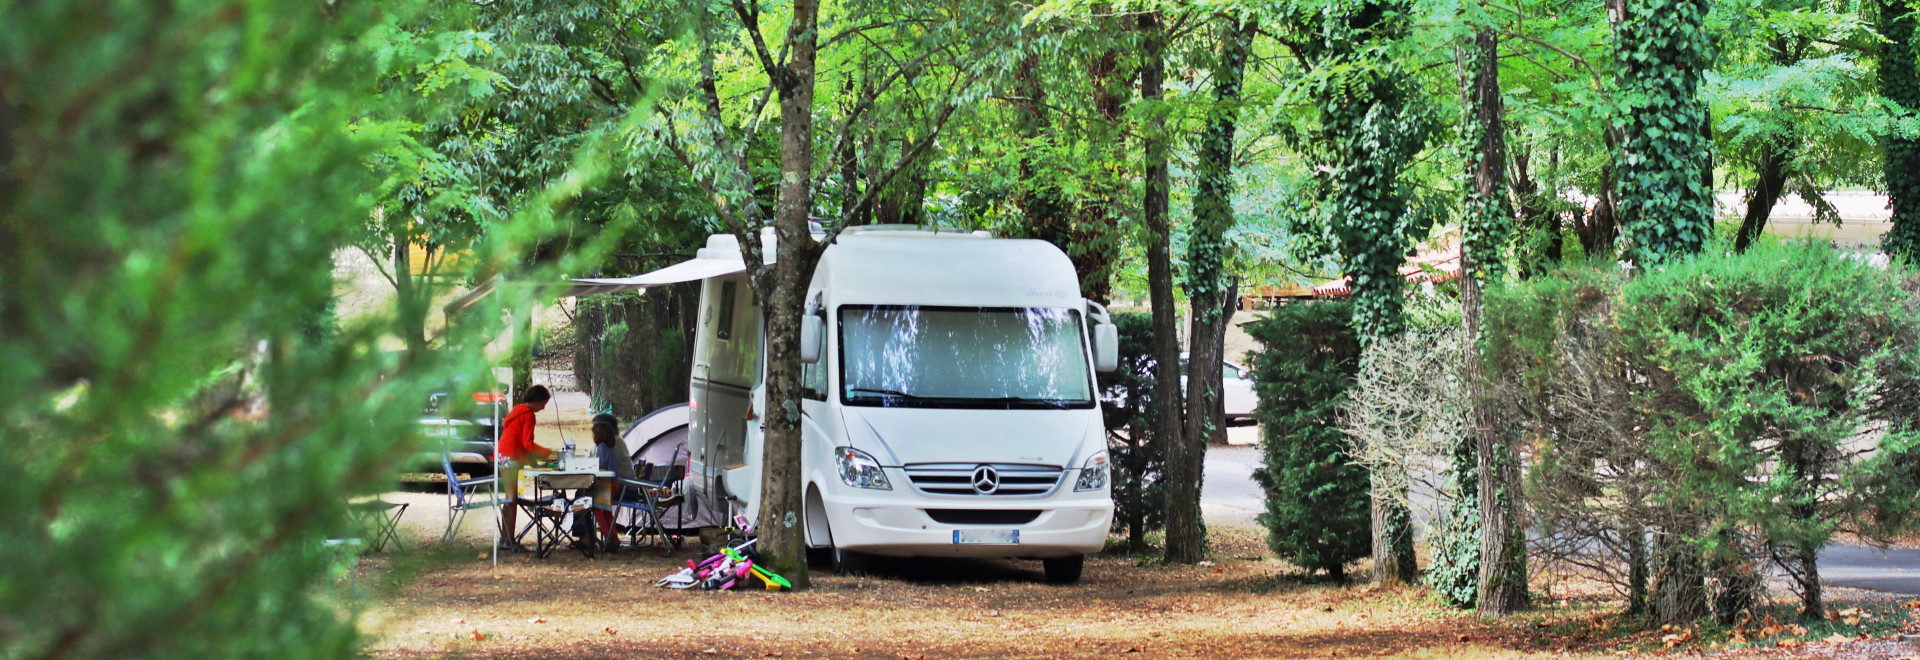 Sunêlia La Clémentine - camping5.jpg